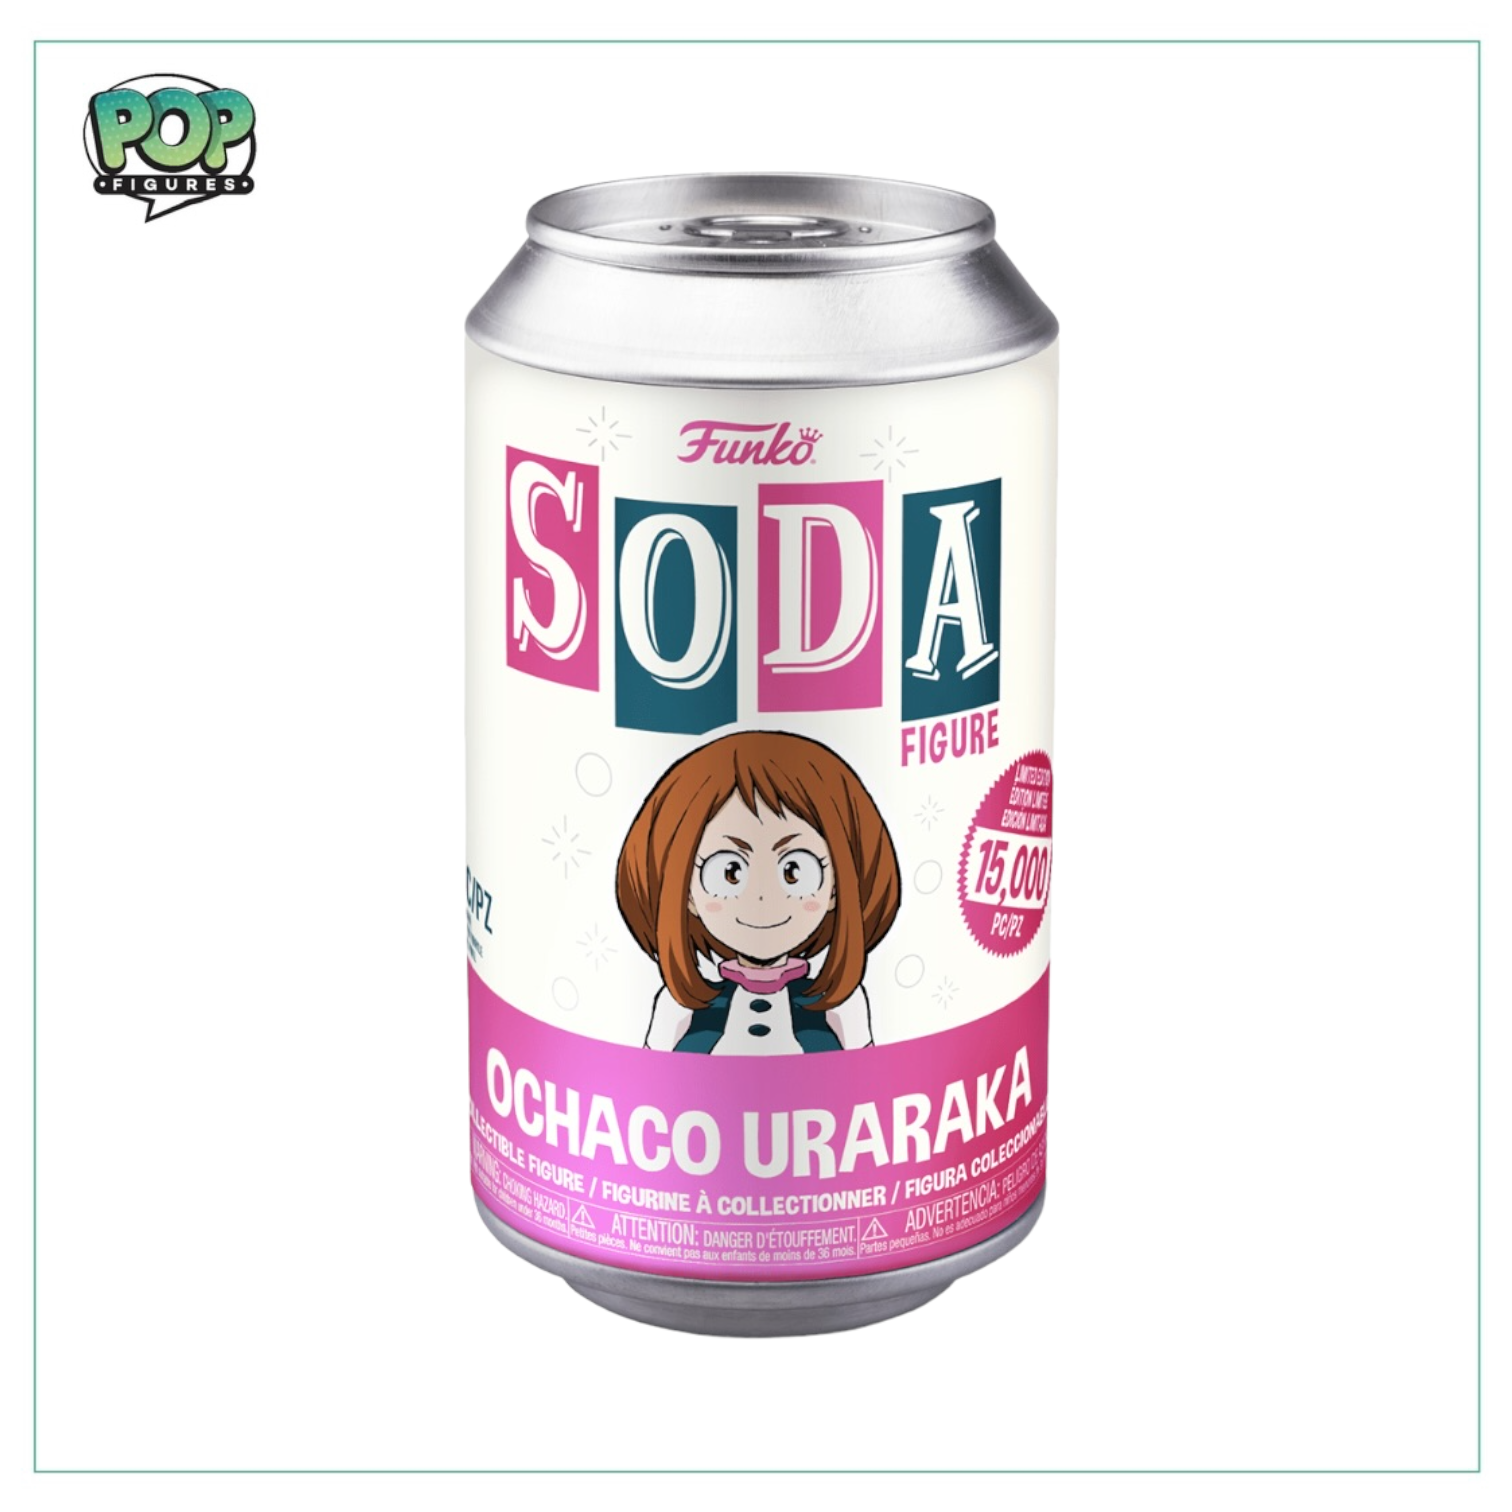 Ochaco Uraraka Funko Soda Vinyl Figure! - Anime - LE15000Pcs - Chance Of Chase